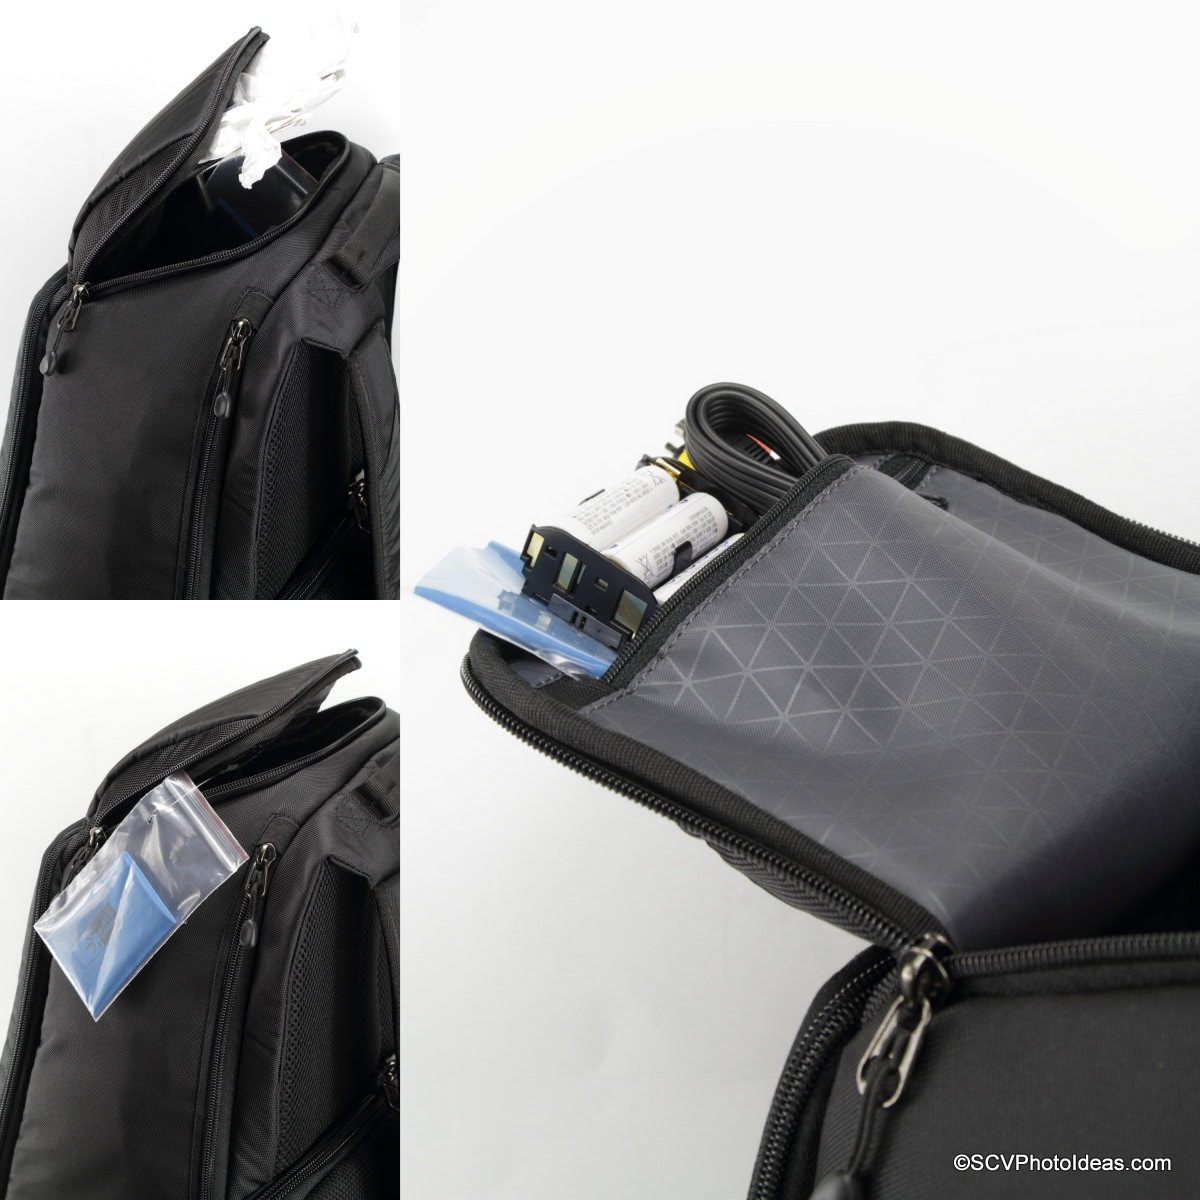 Case Logic DSB-103 top compartment zippered lid pocket